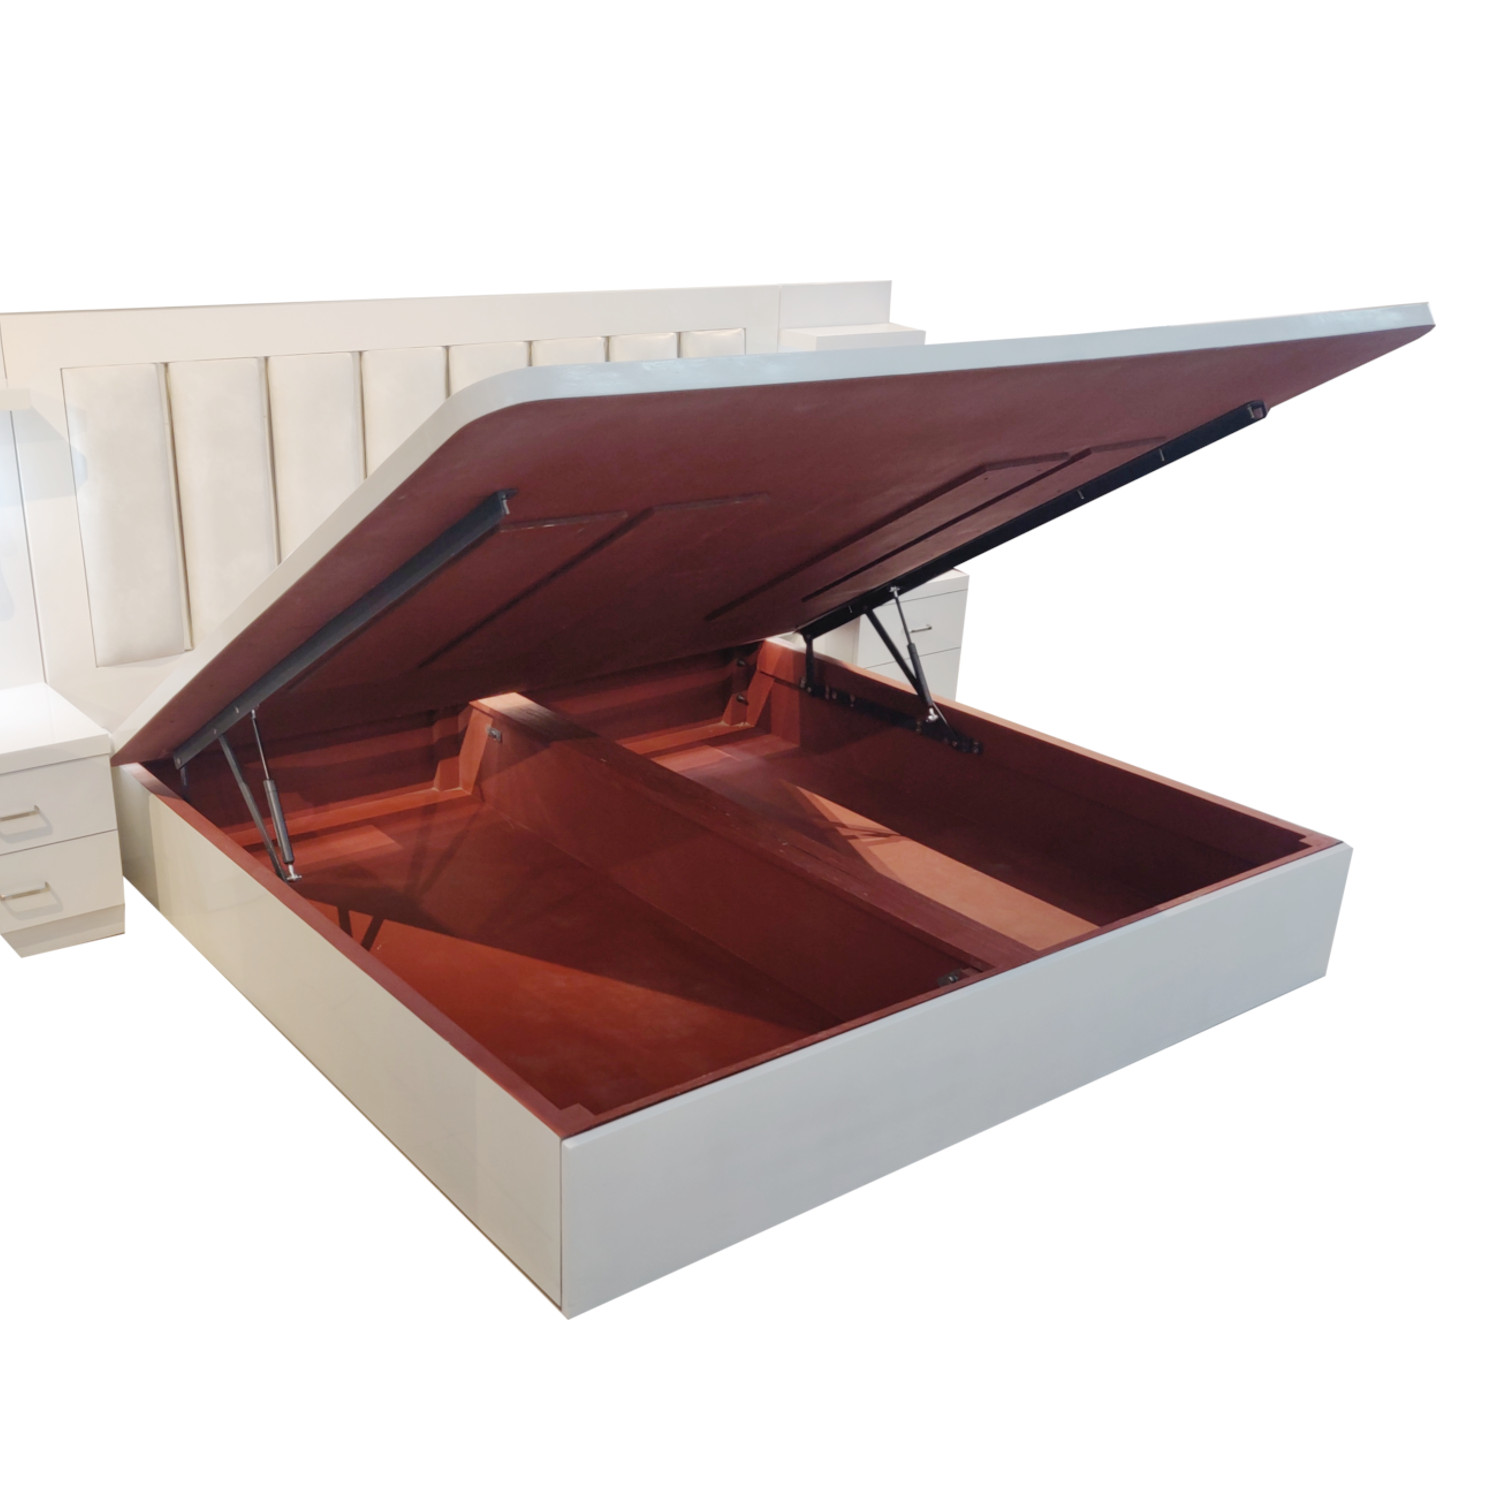 Amaltas White Bed with Platform and Fully Hydrolic Storage